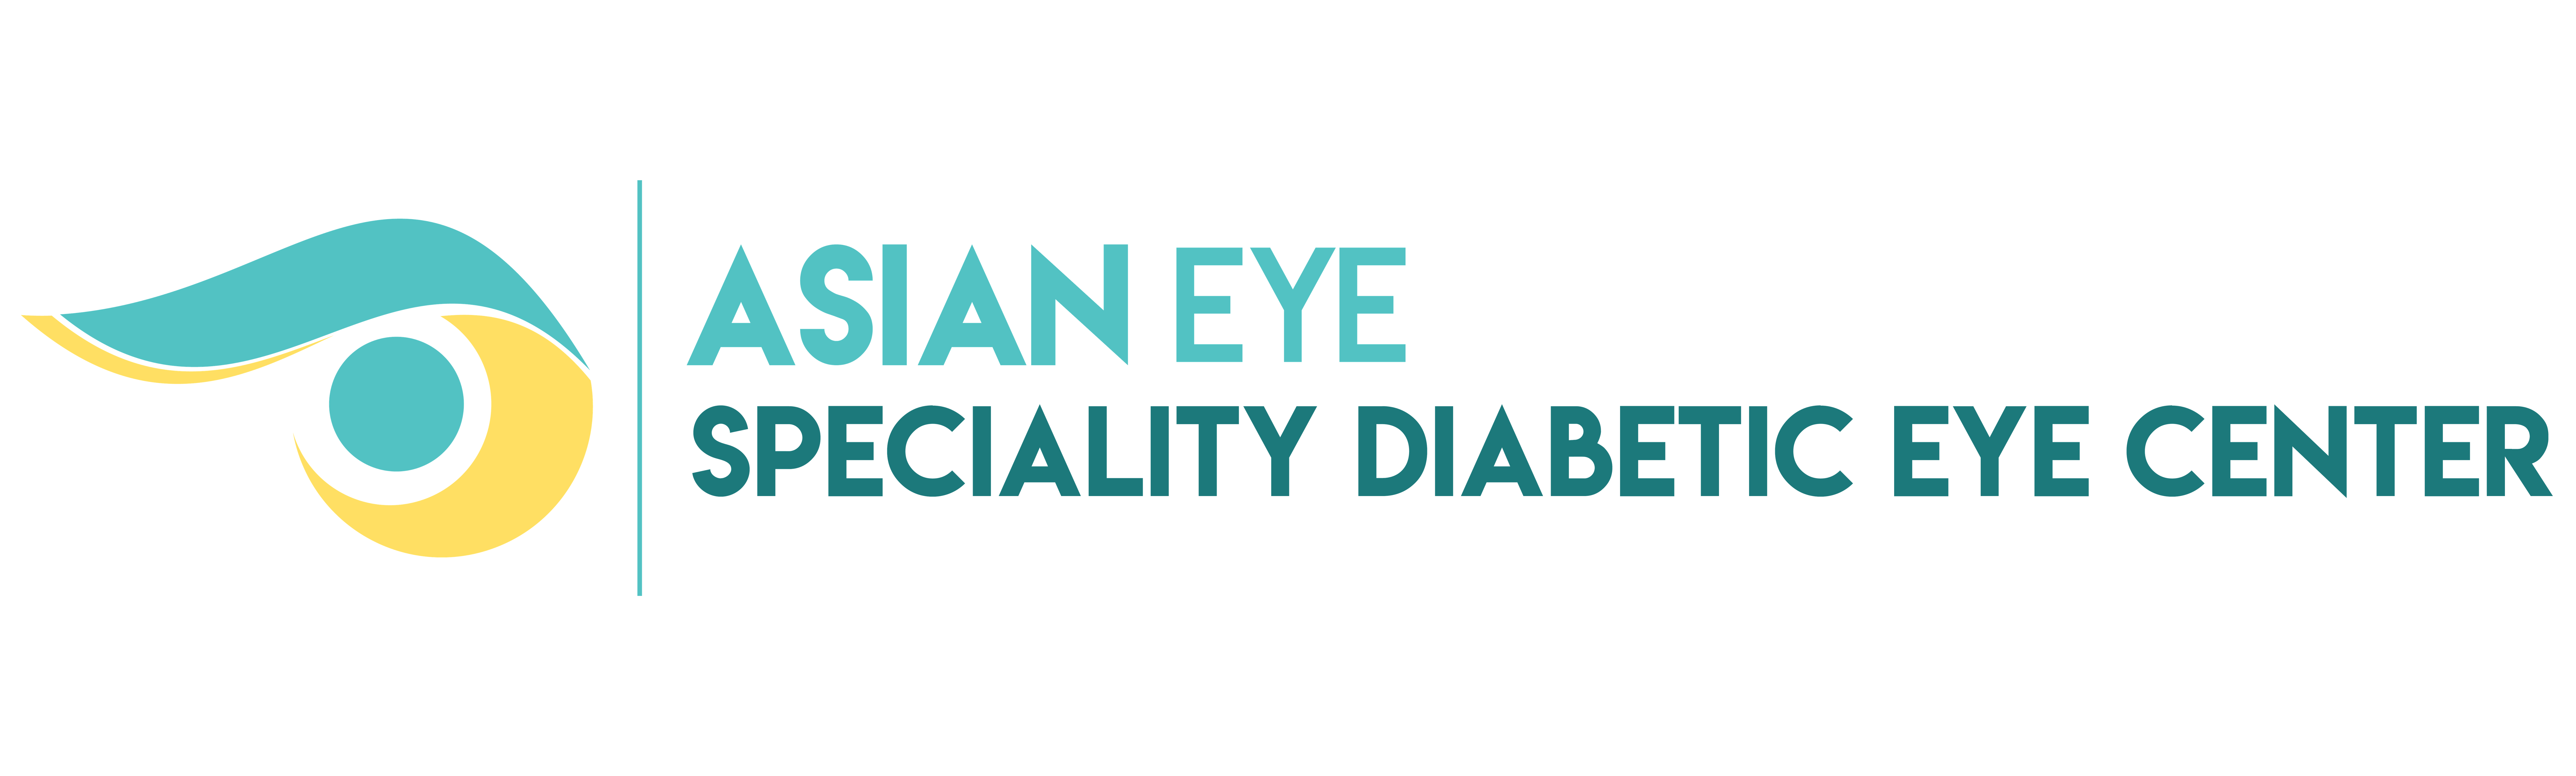 diabetic eye hospital in pune